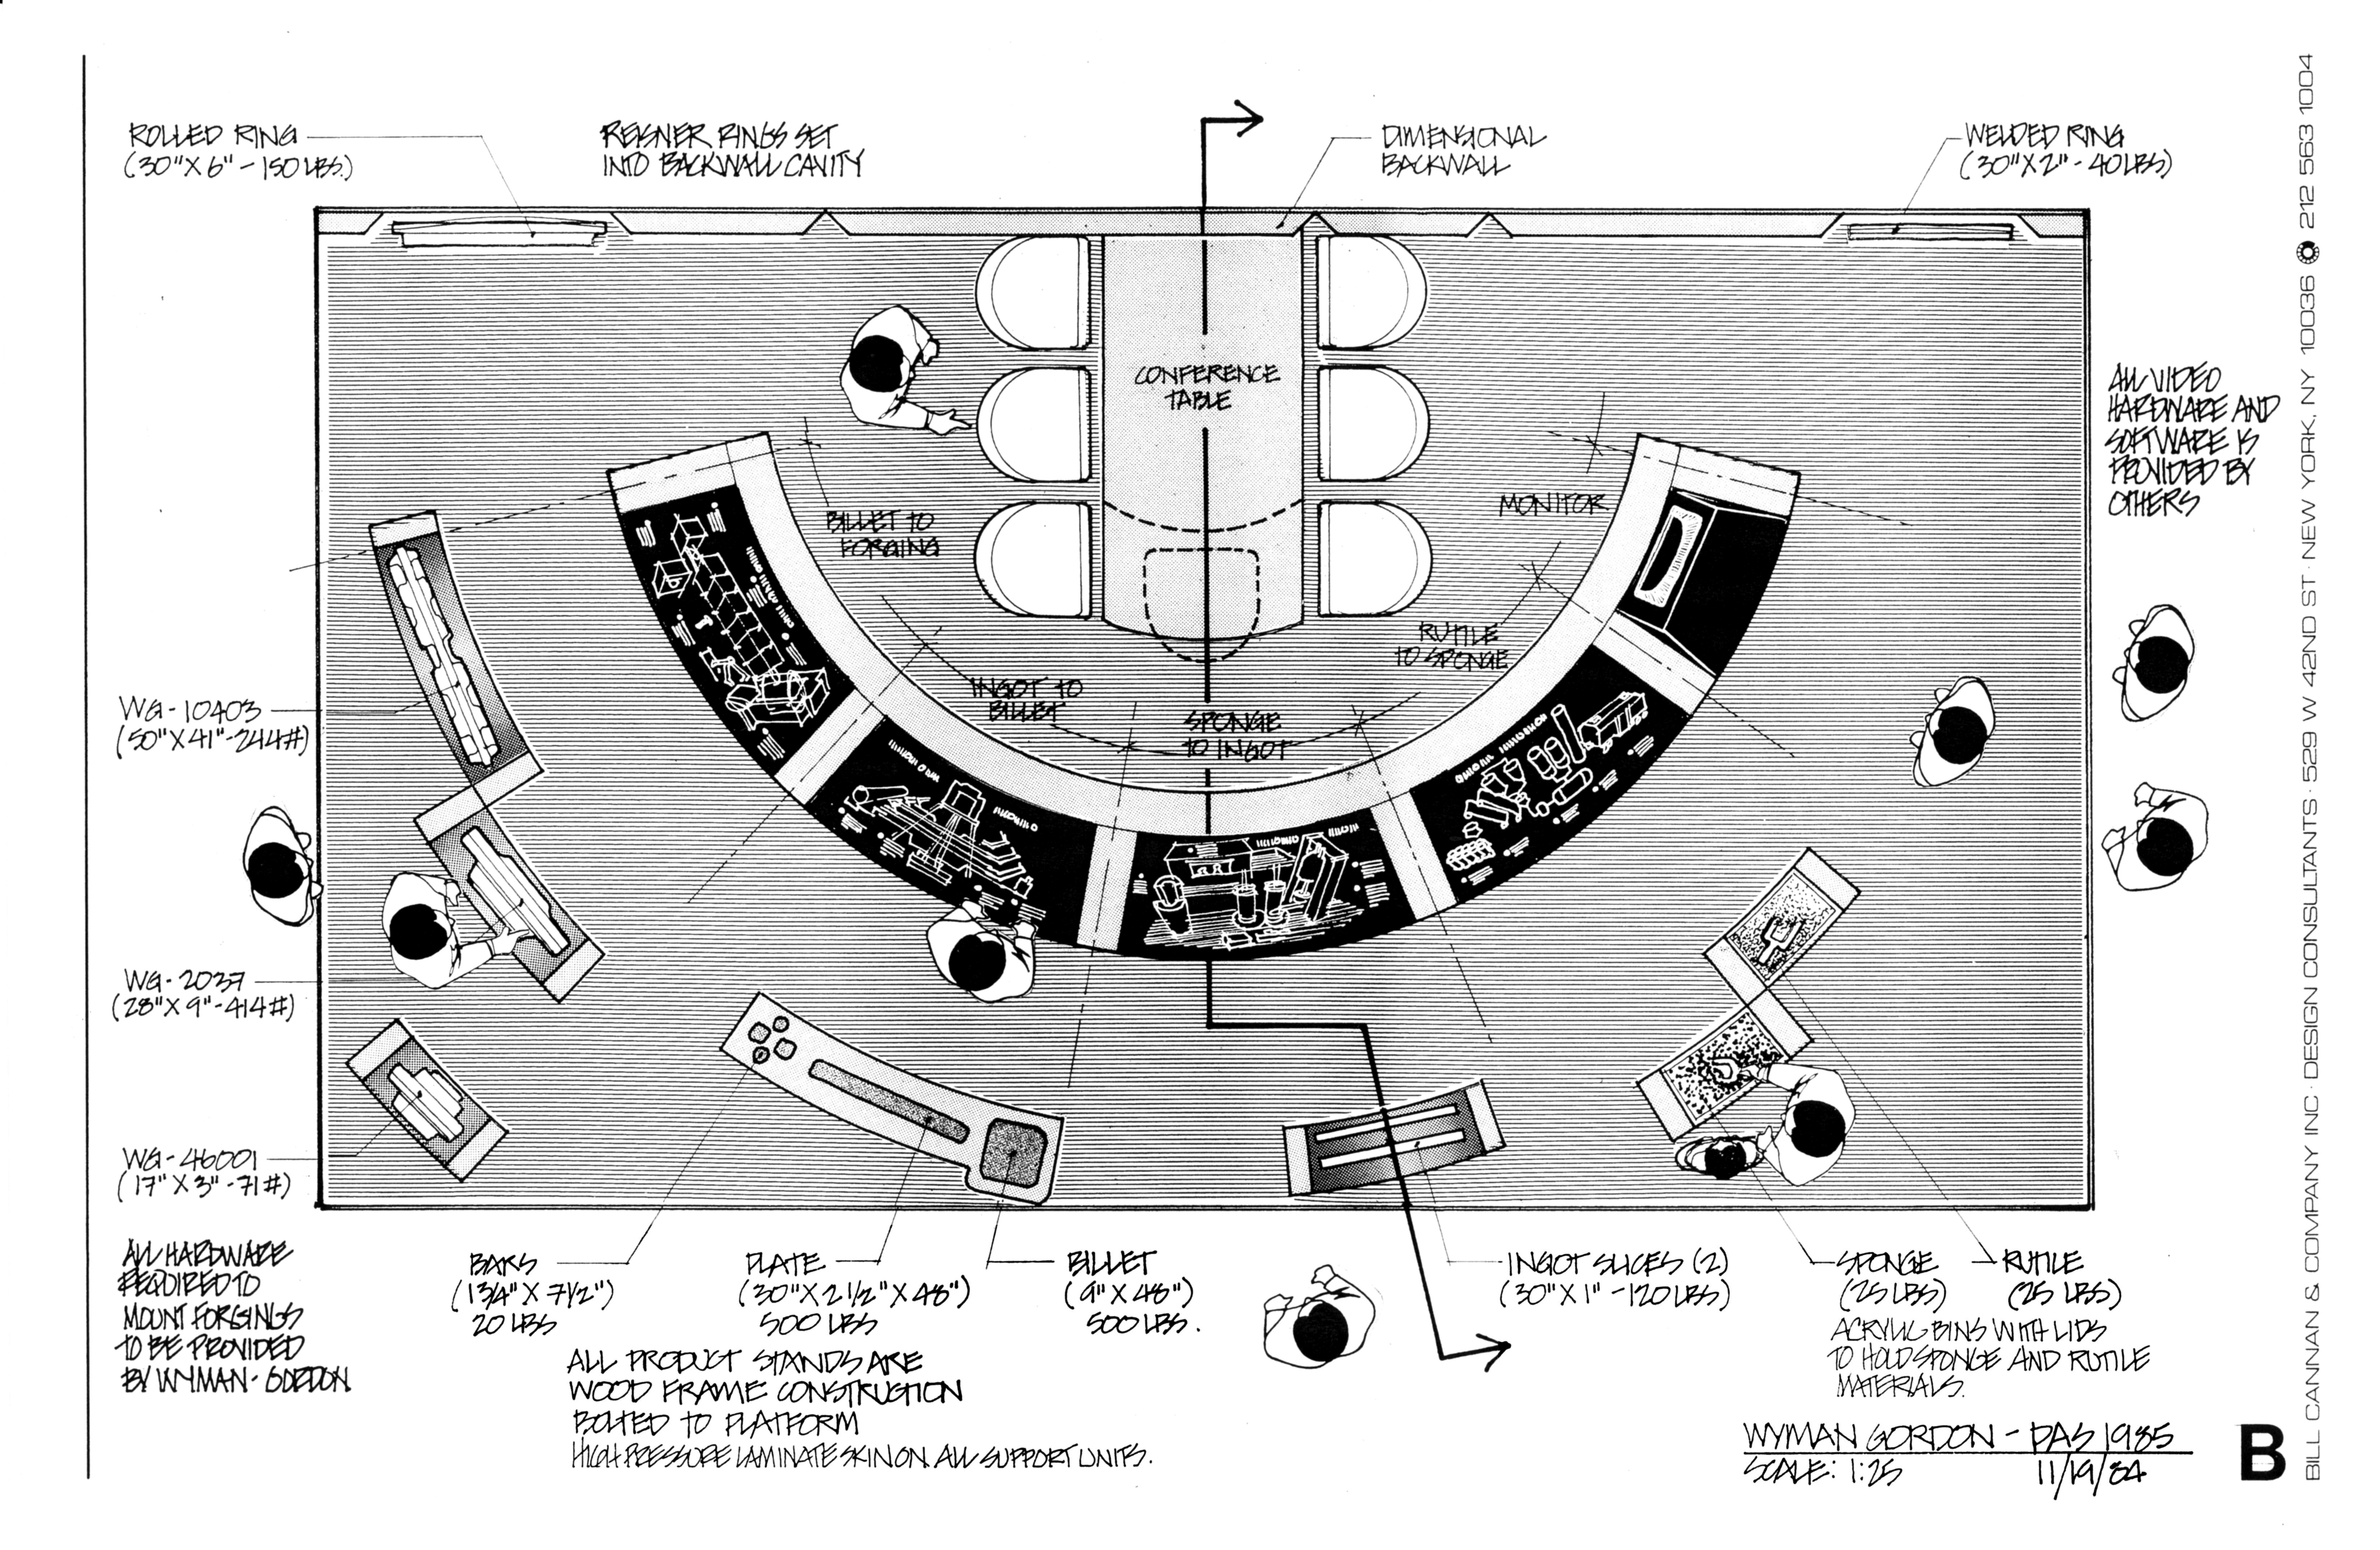 Original Exhibit Plan Sketch for 1985 Paris Air Show.